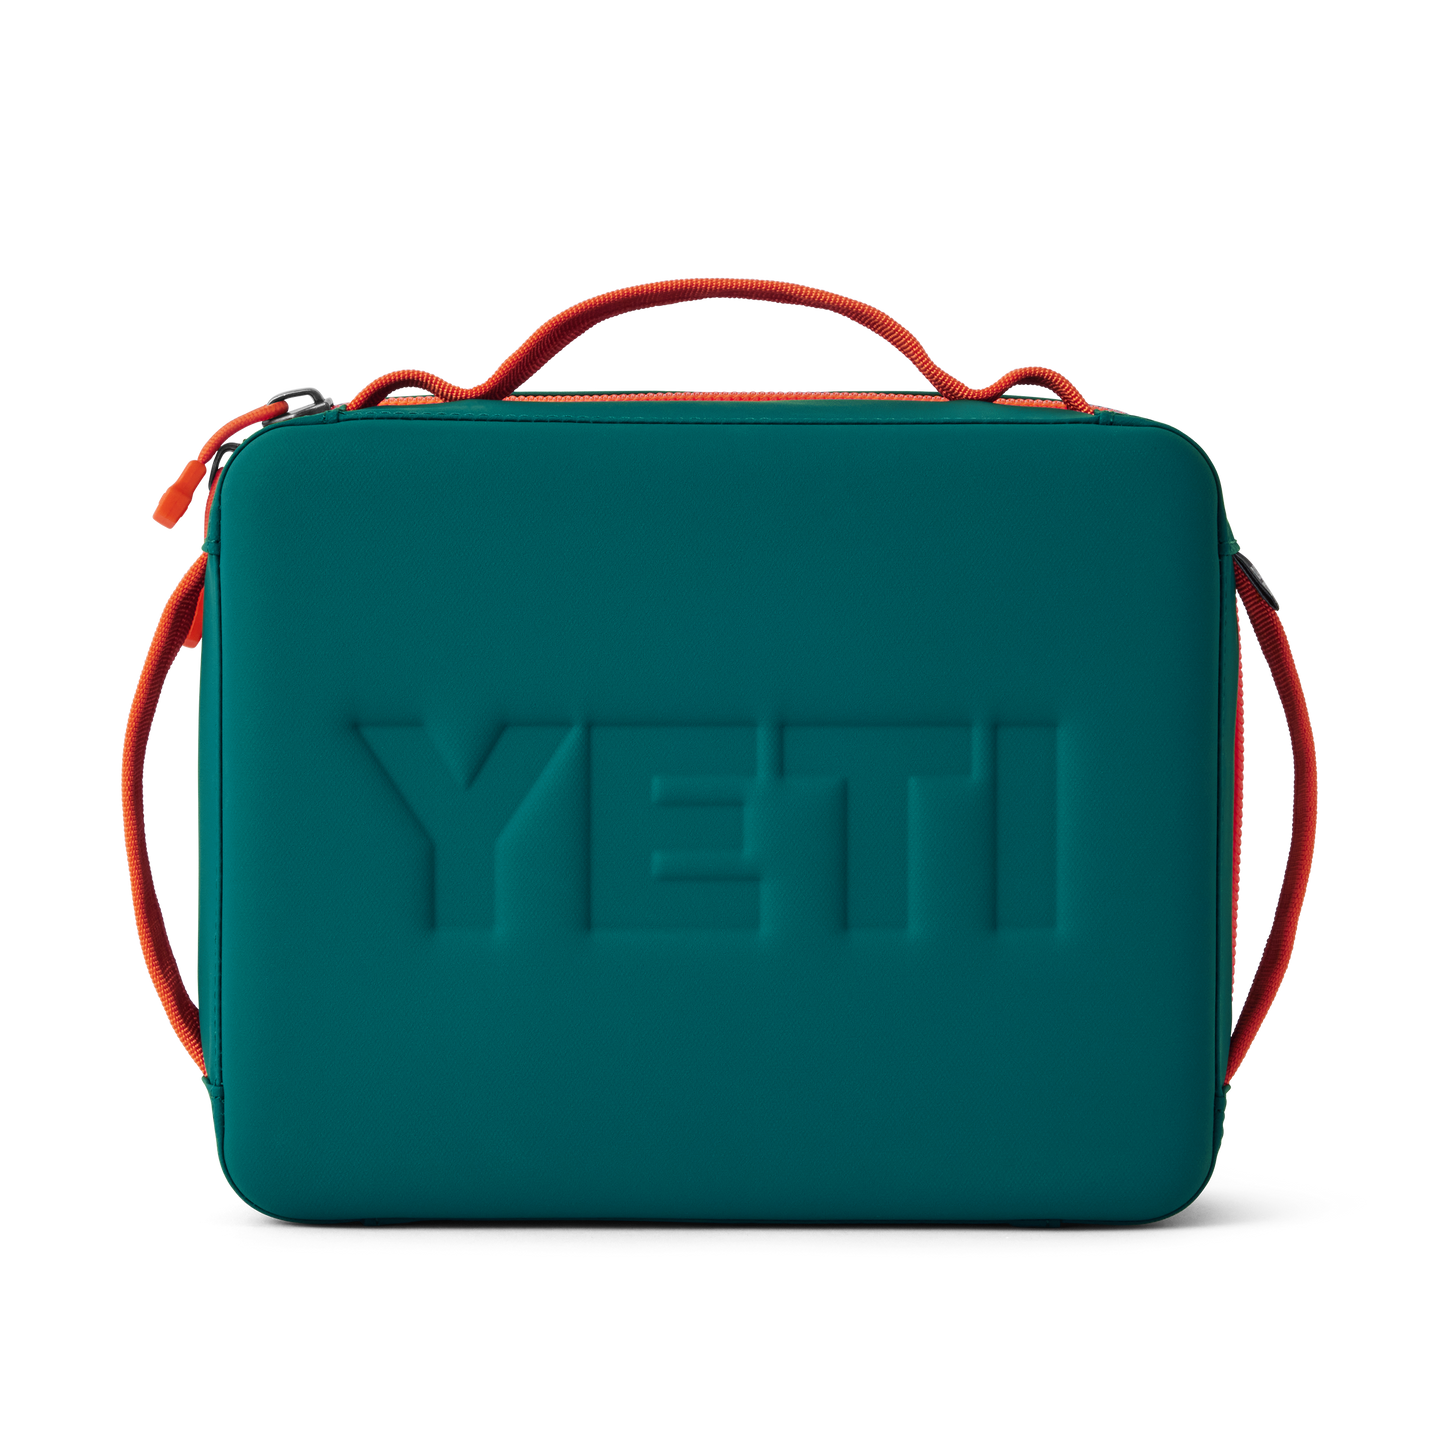 YETI DayTrip® Lunch Box Crossover